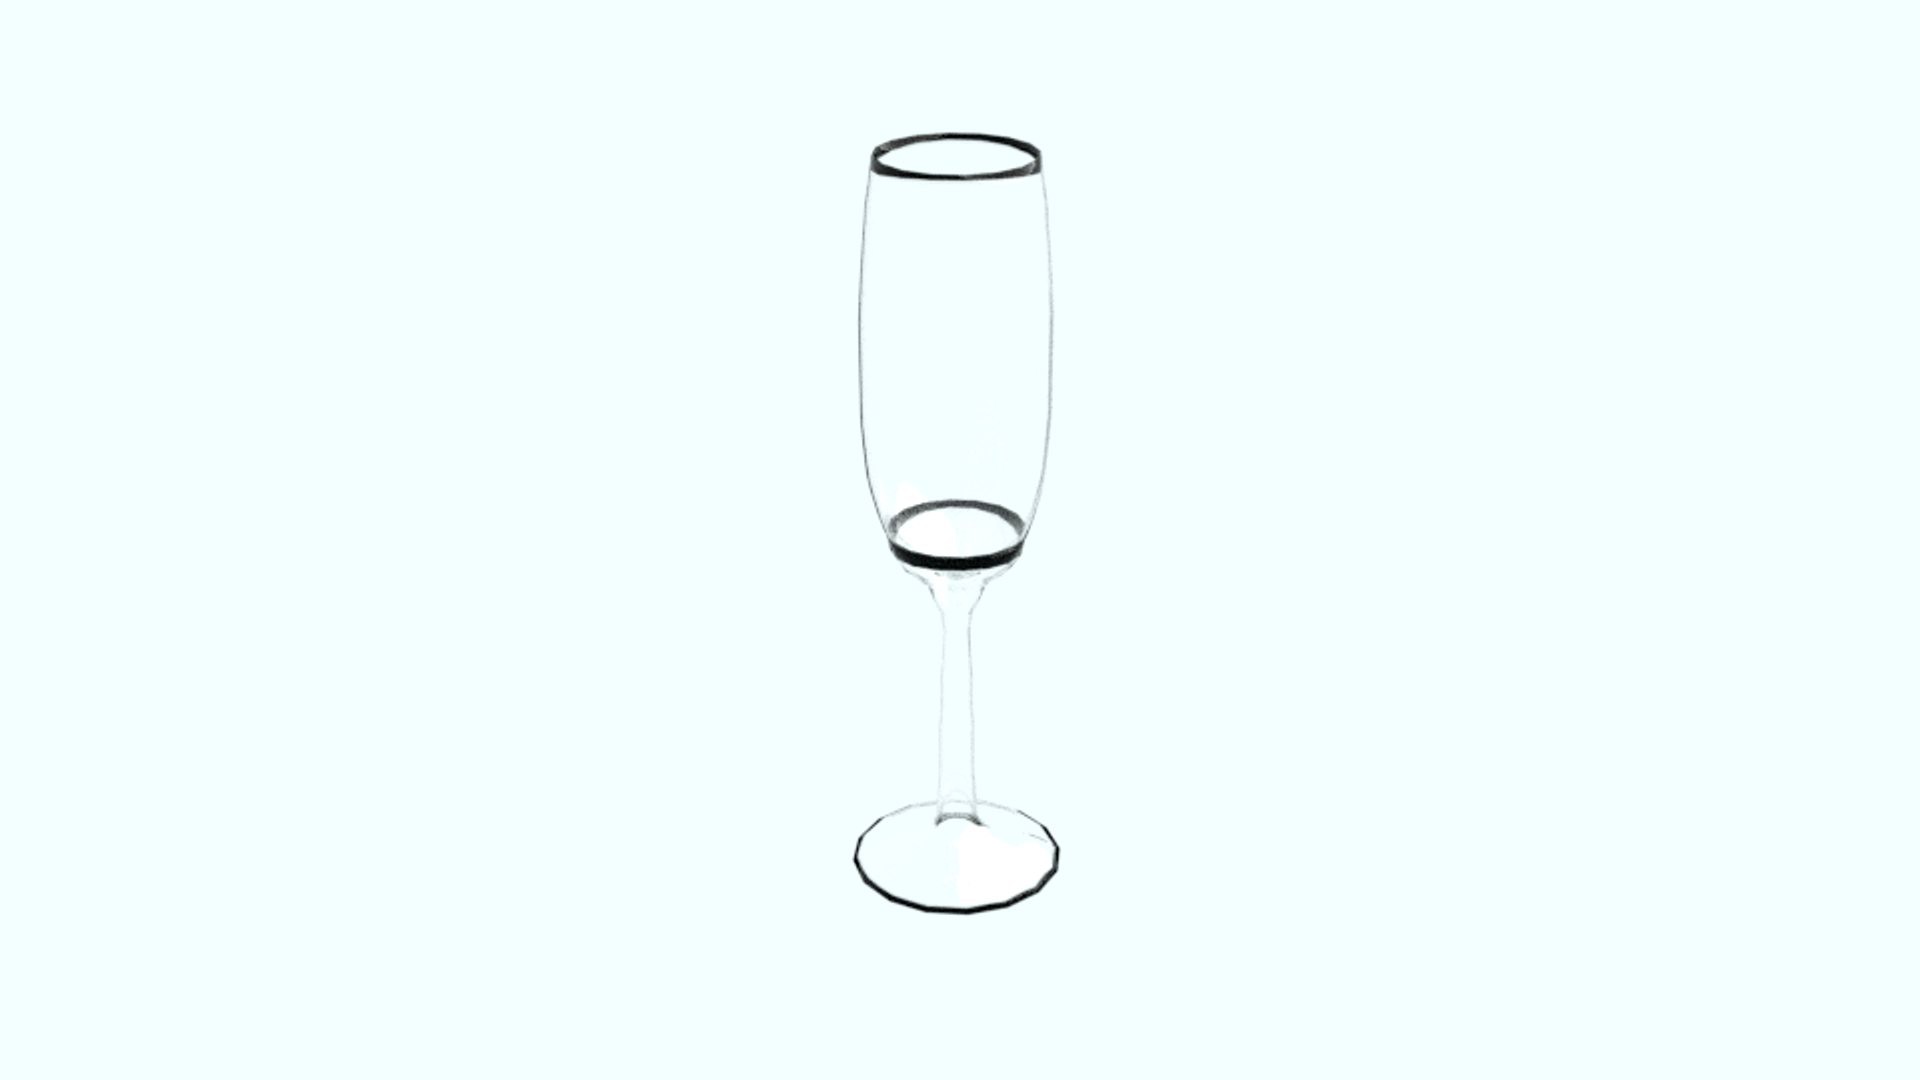 Simple Glass